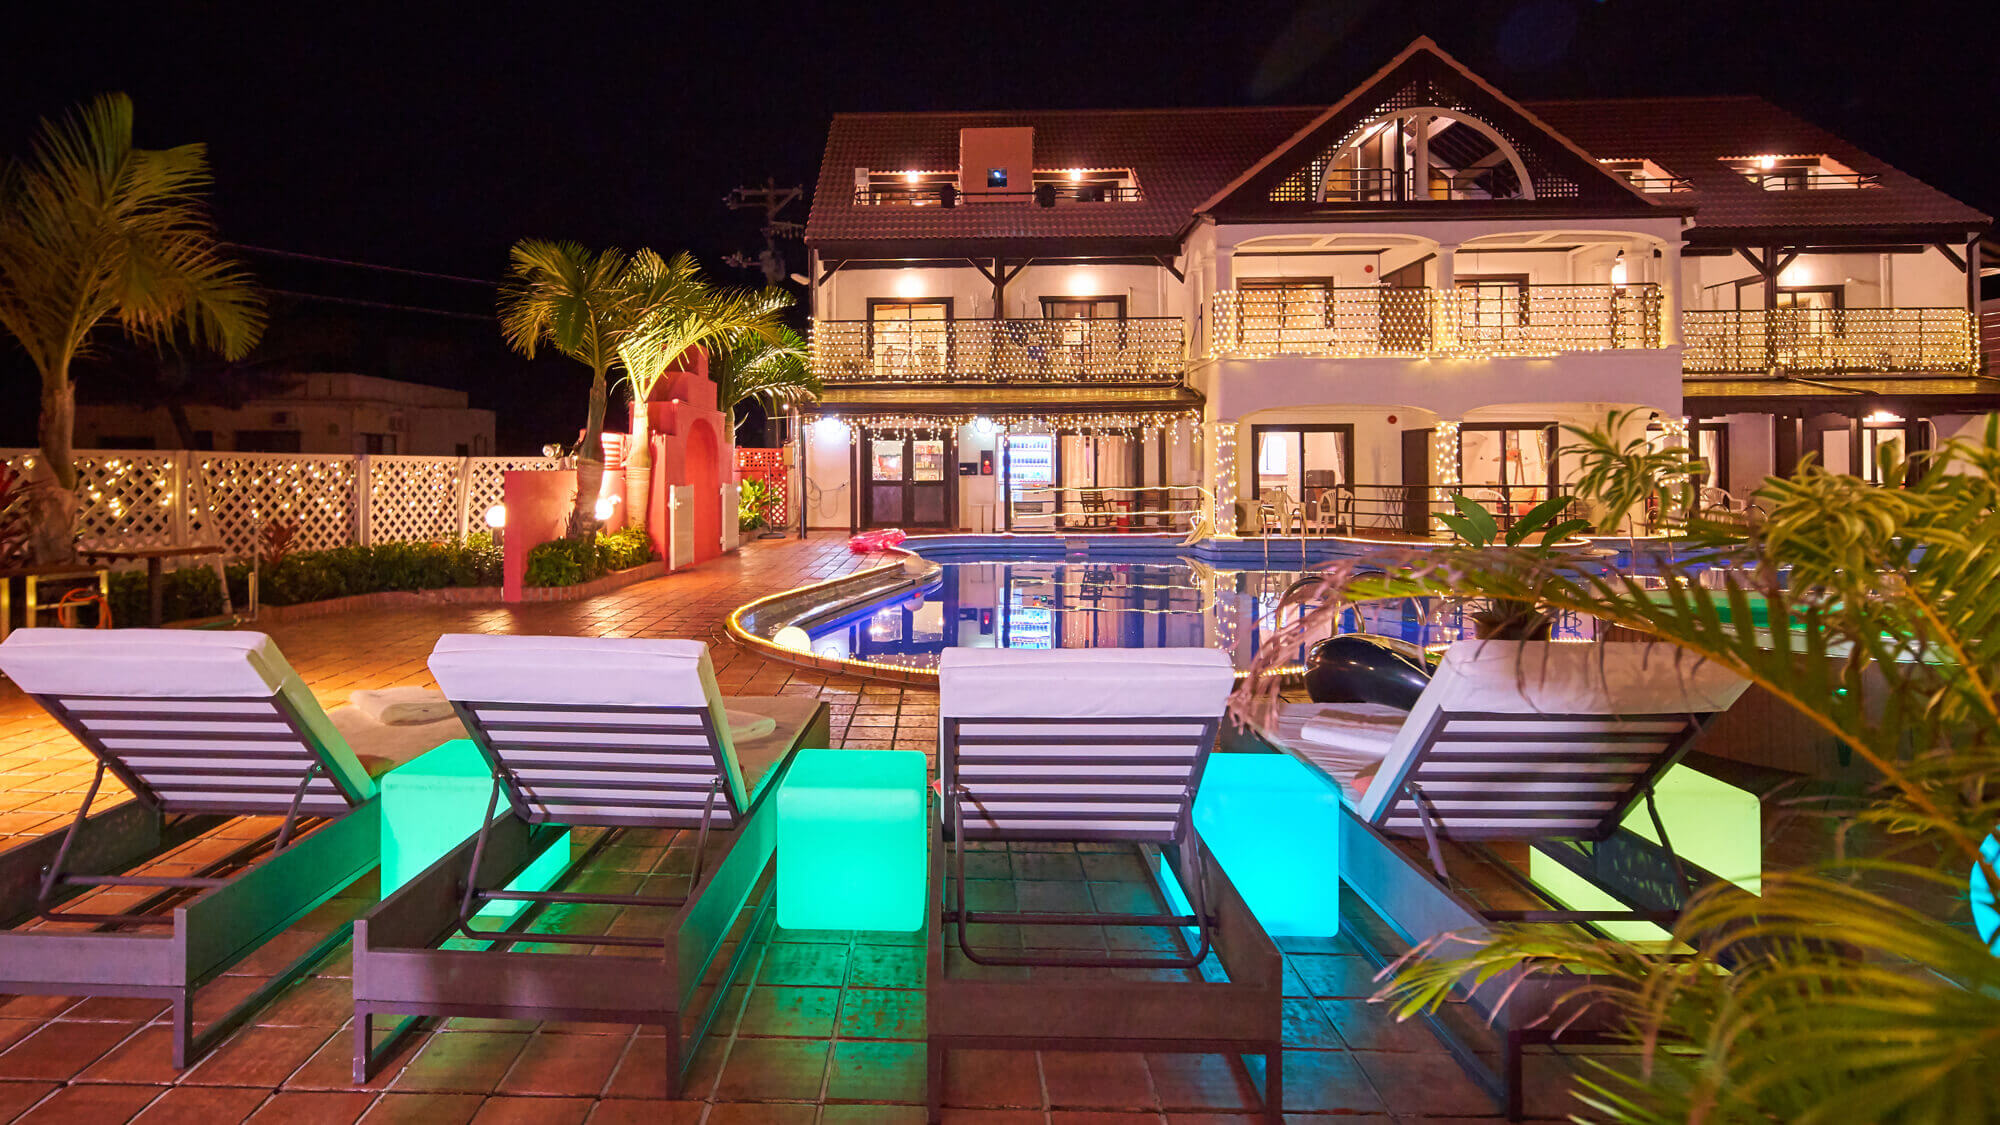 The Pool Resort Villa Ichigoichie